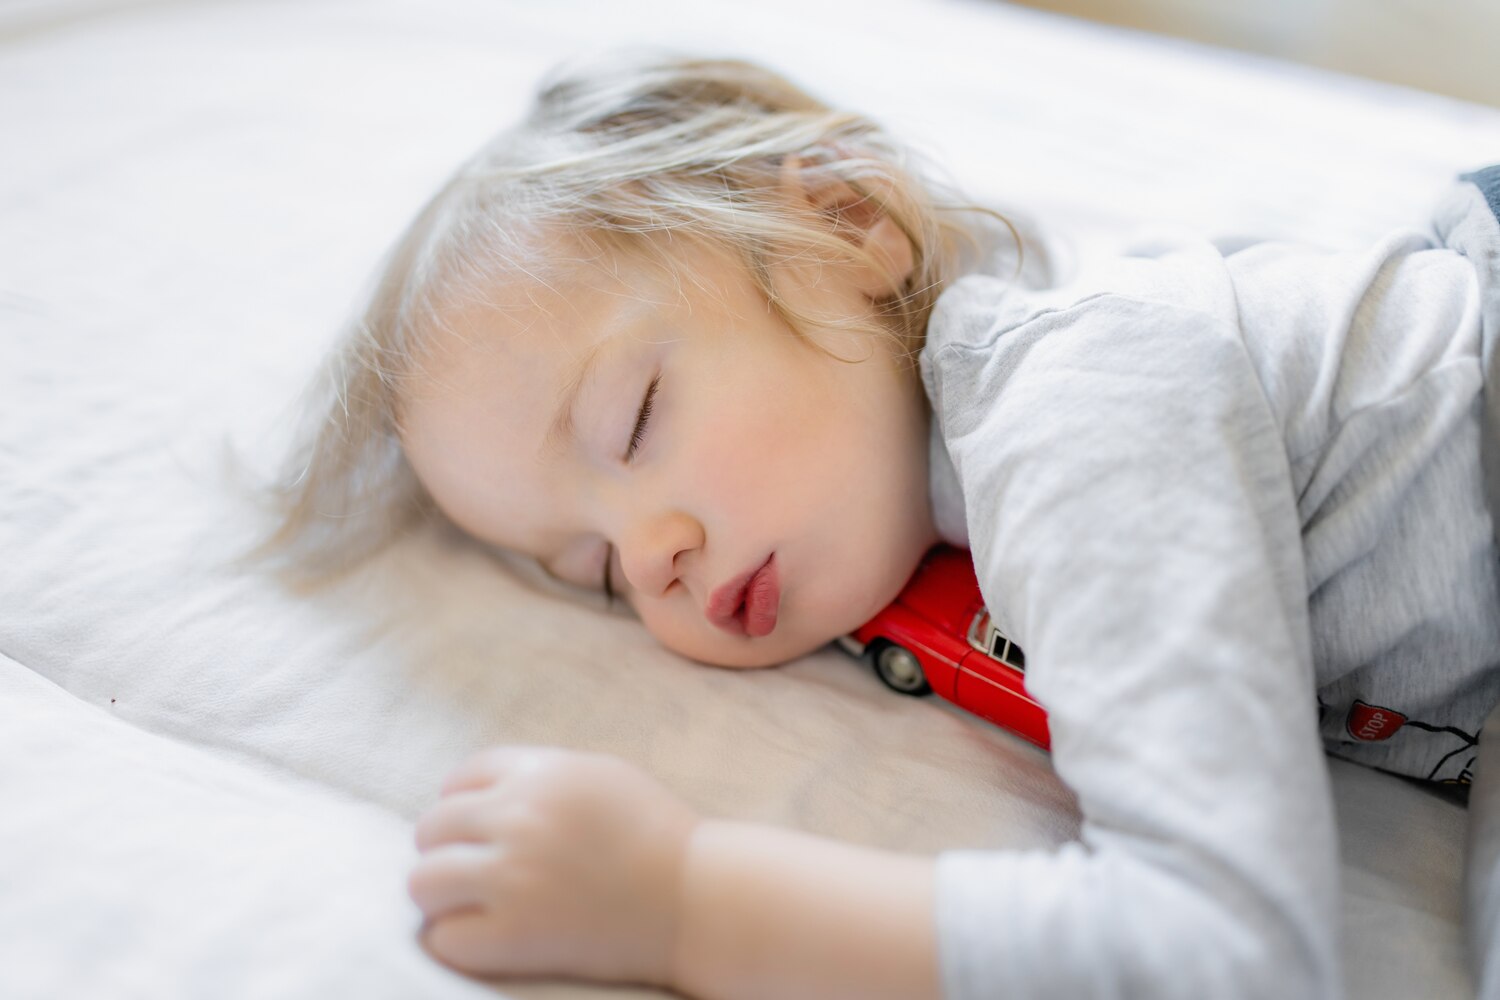 Kids' sleep requirements change as they grow up